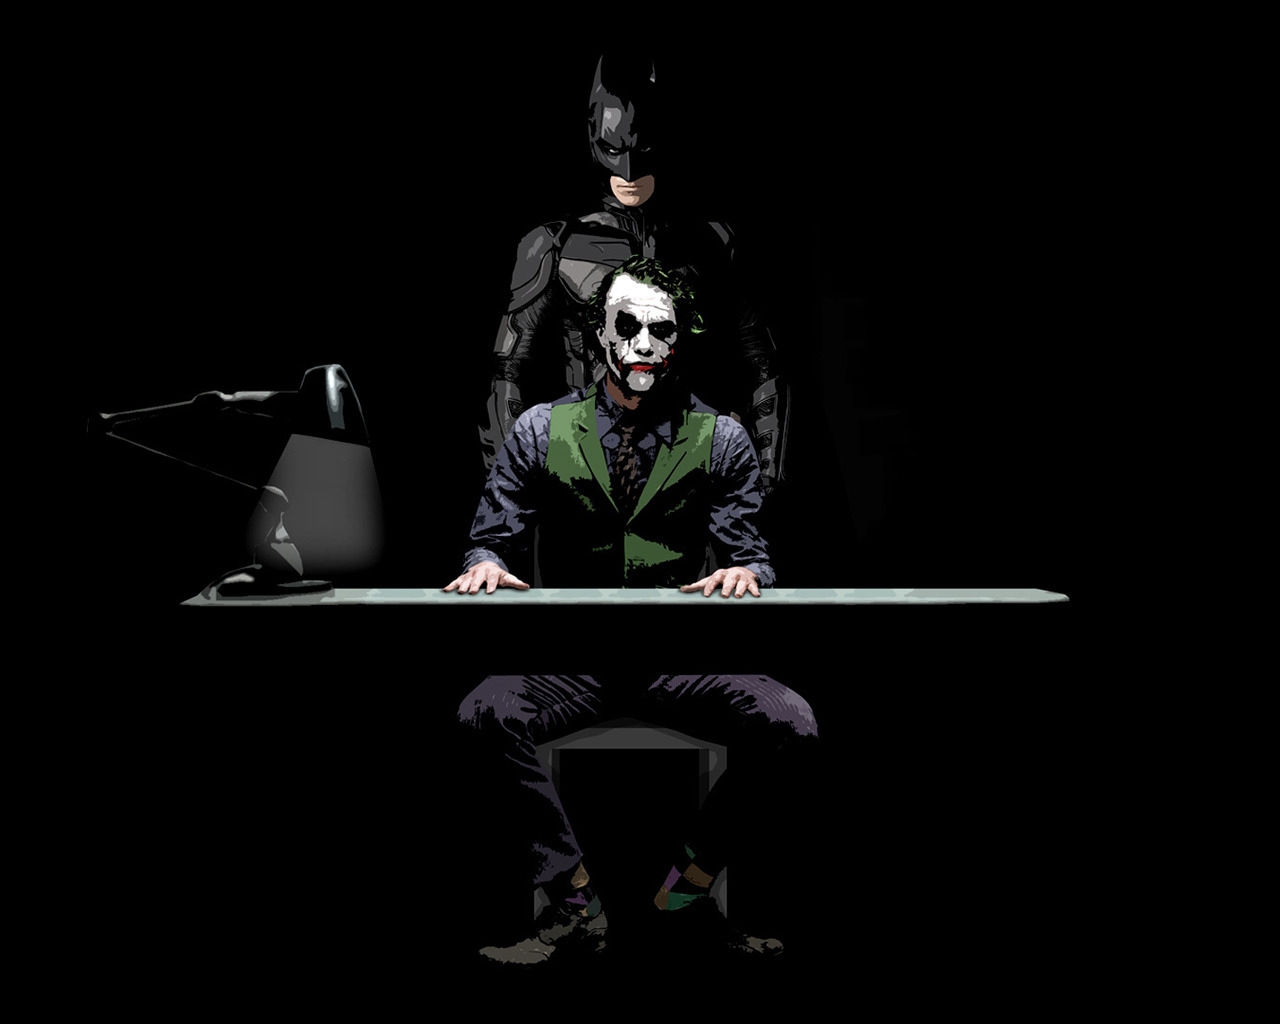 Batman and Joker Sketch for 1280 x 1024 resolution